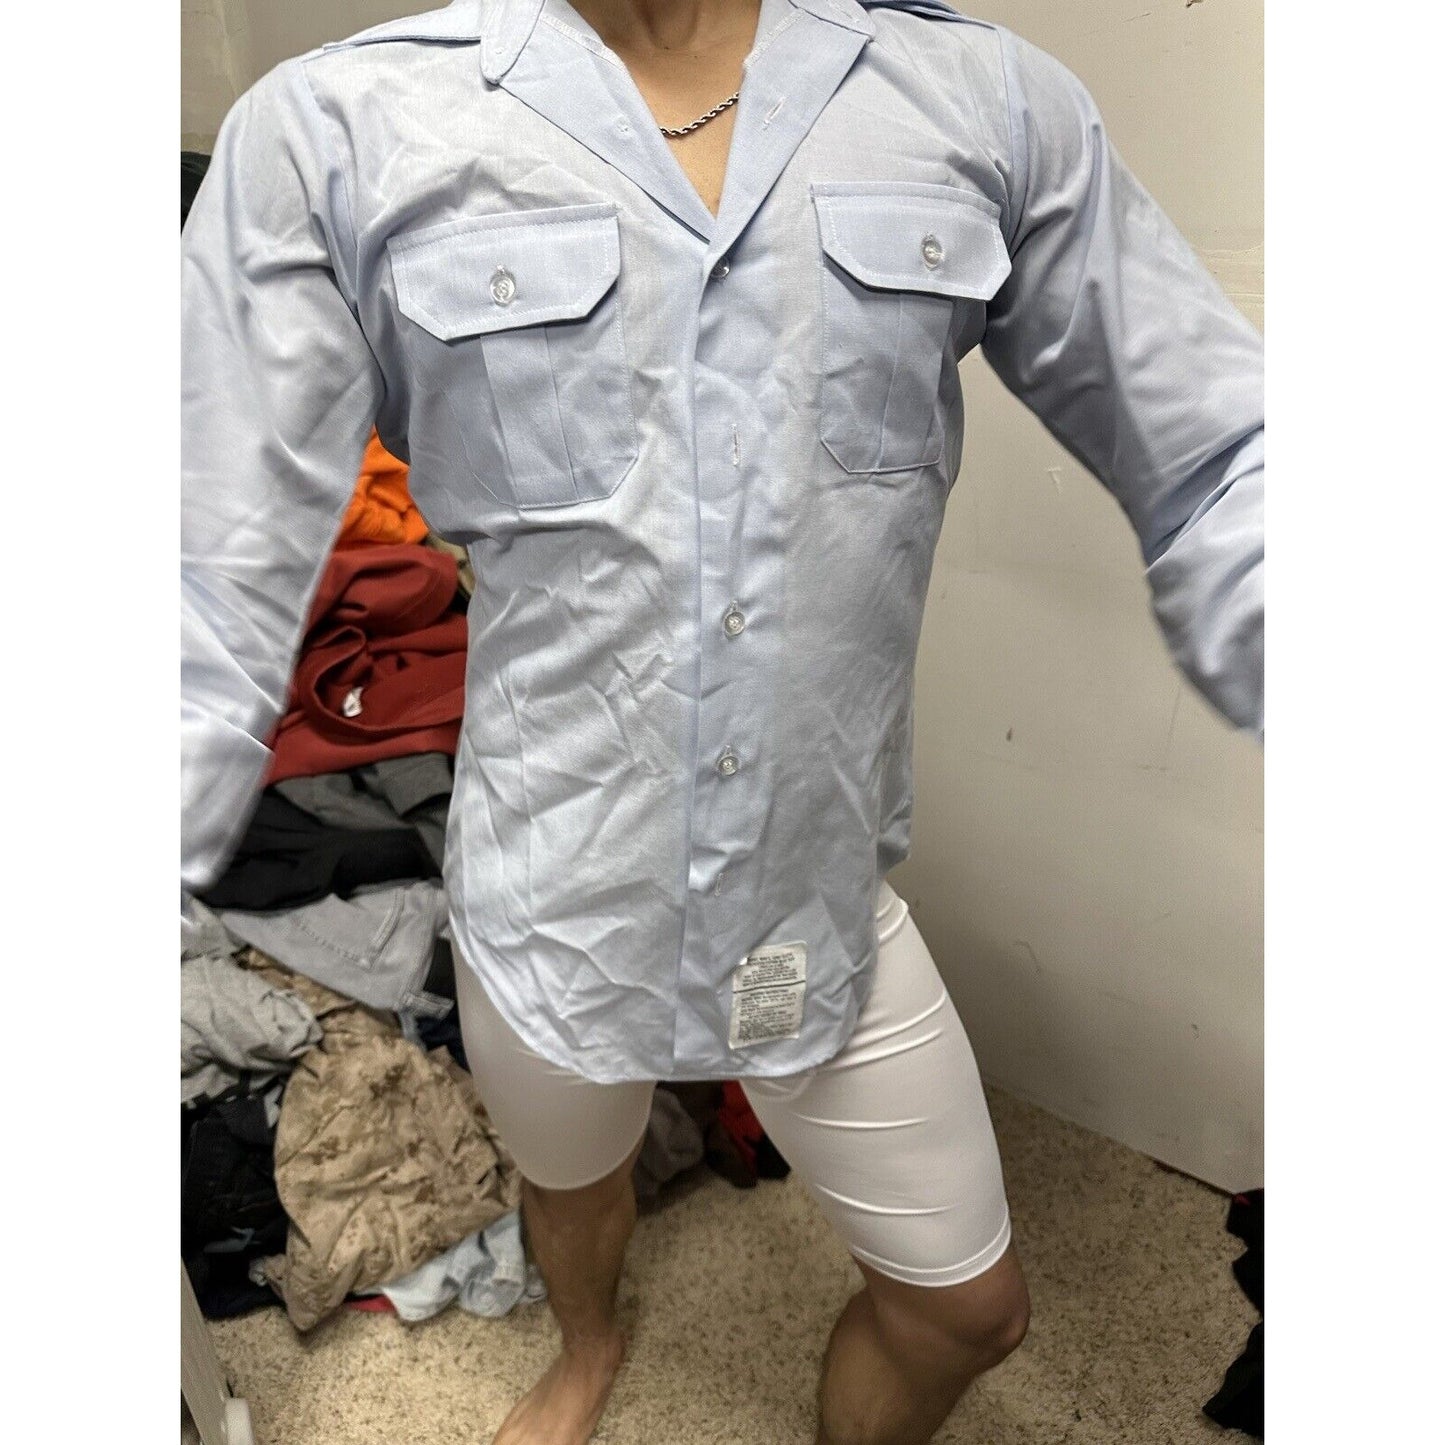 Men’s Dress Blues Shirt USSF USAF Coast Guard Uniform Long Sleeve Size 15 X 33